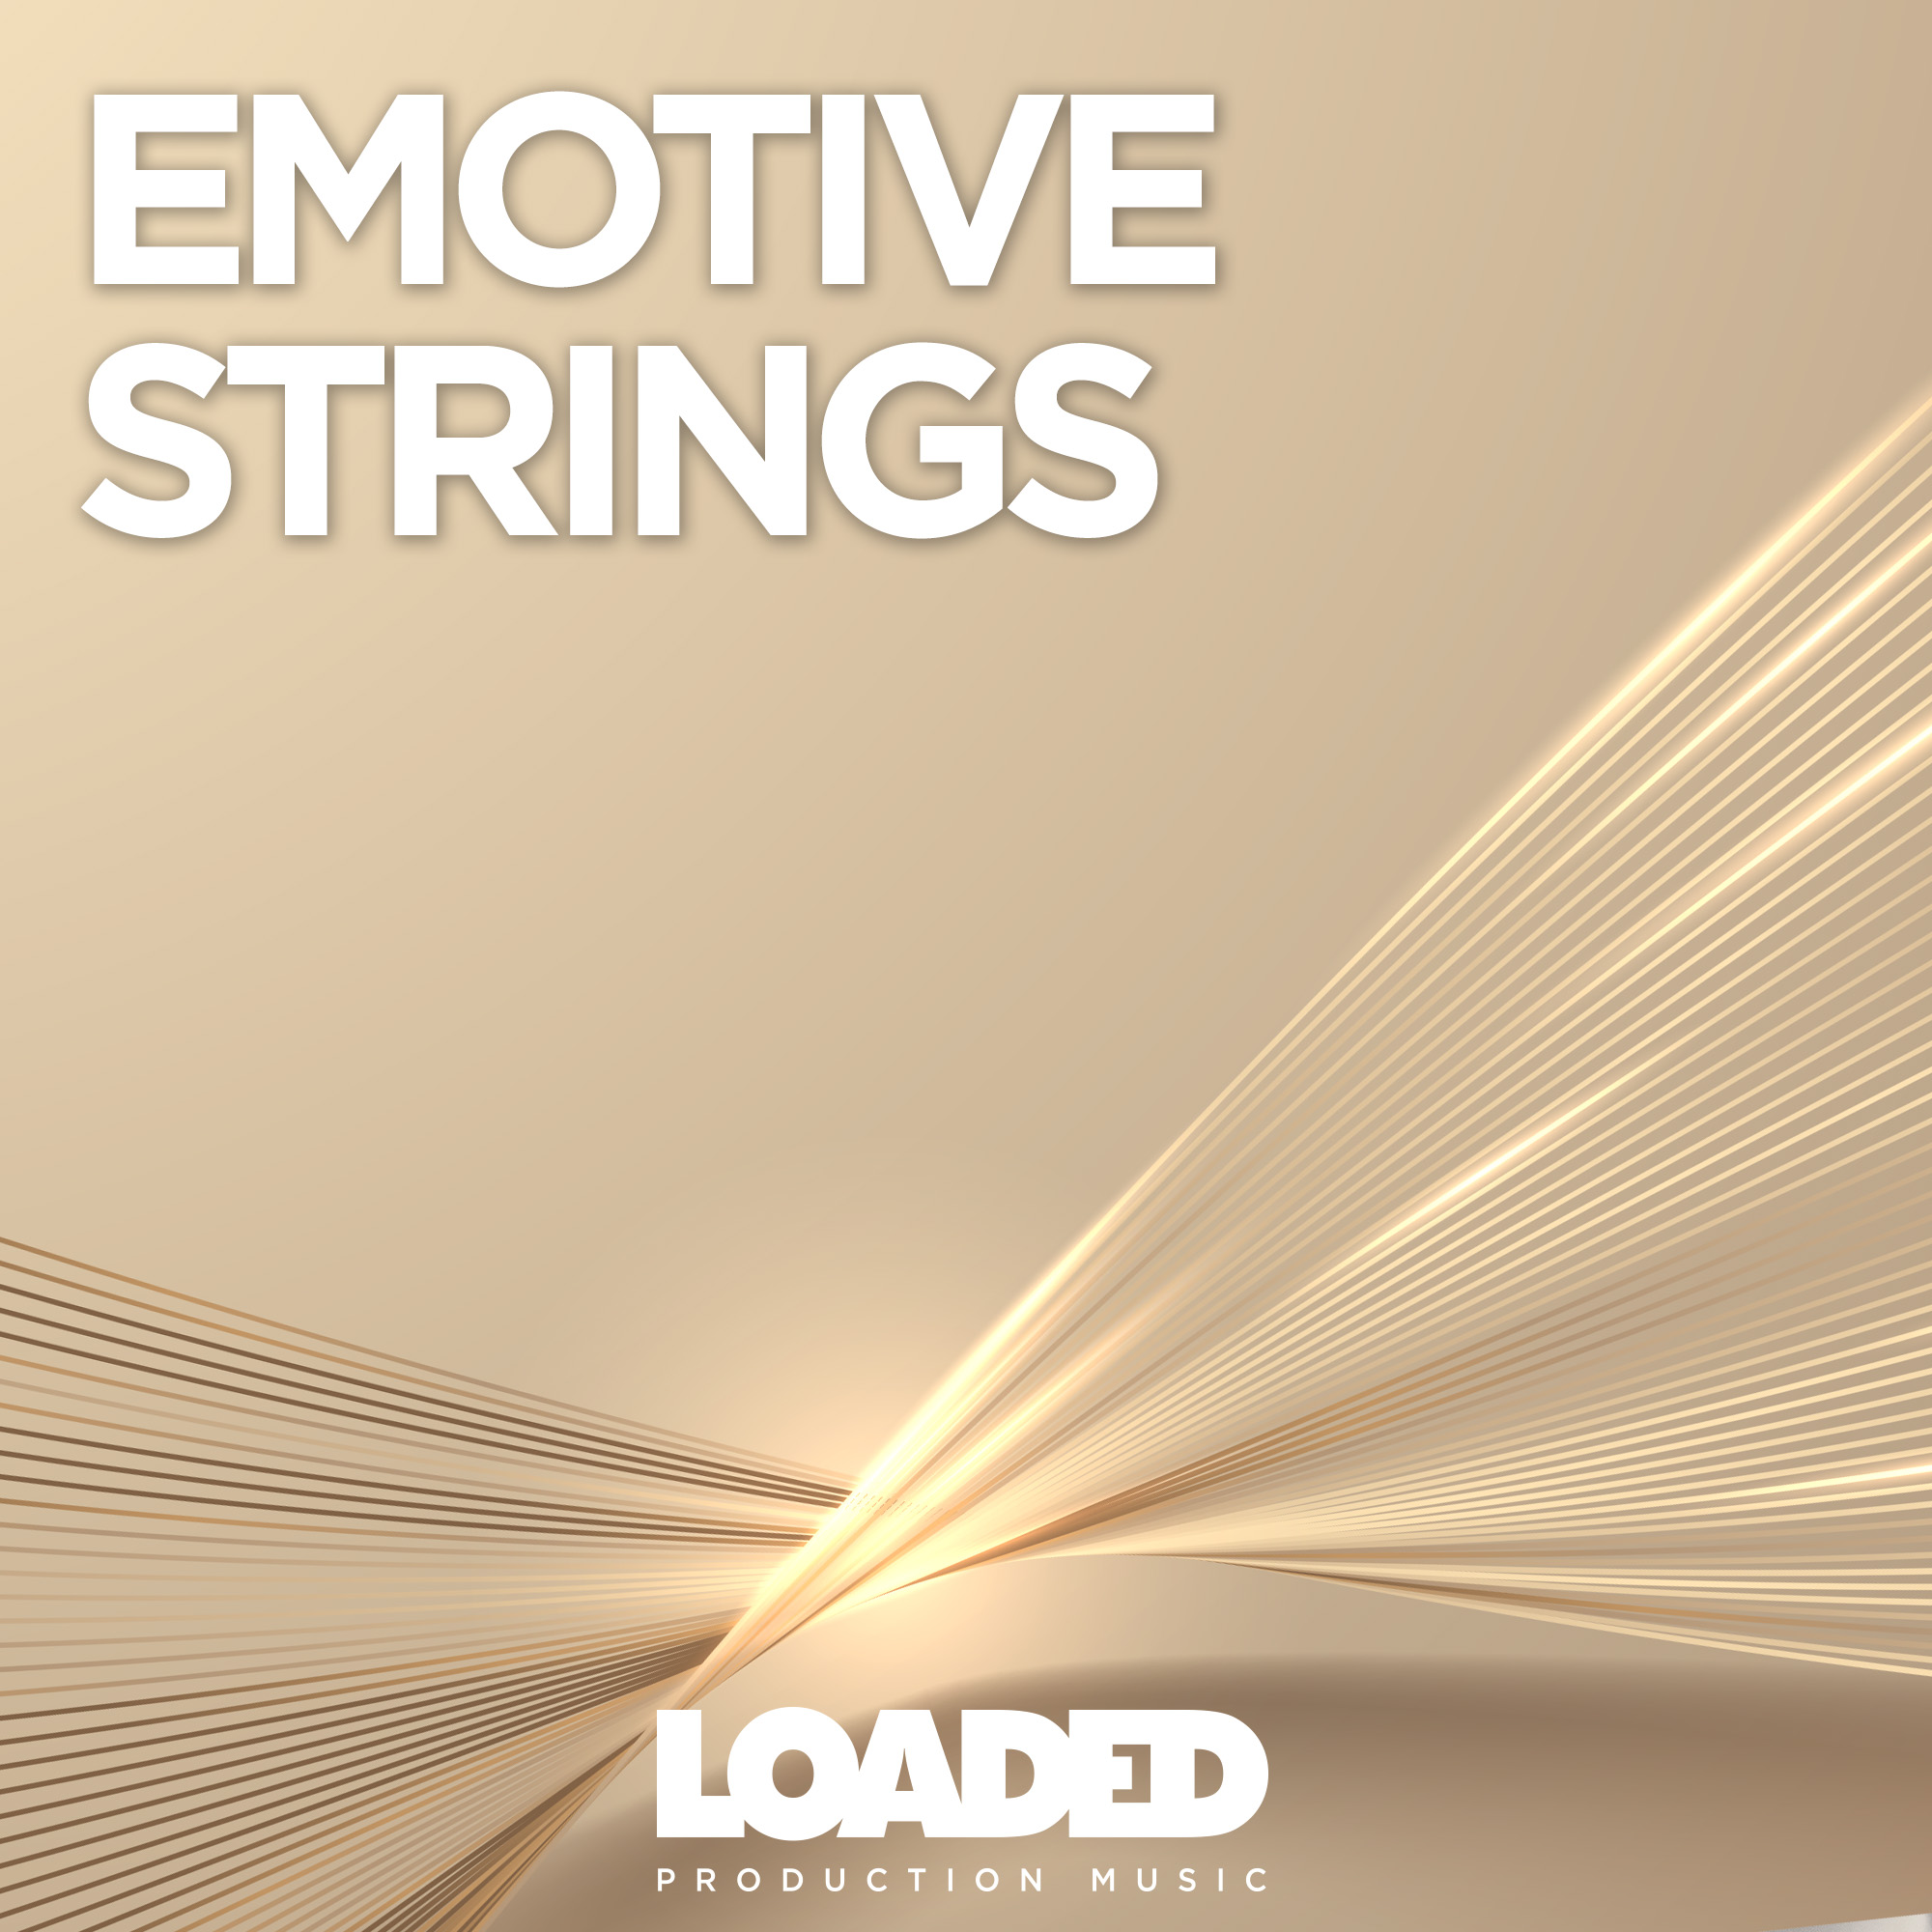 LPM 068 - Emotive Strings - Album Cover